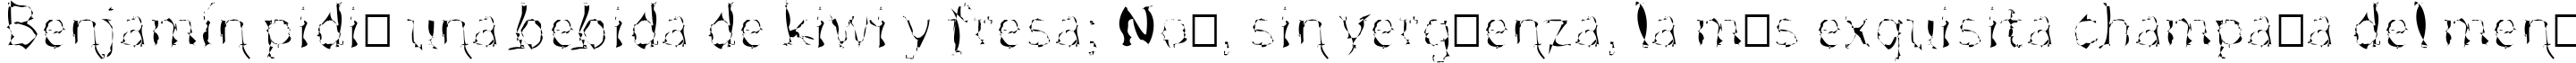 Пример написания шрифтом Rдnnskita текста на испанском